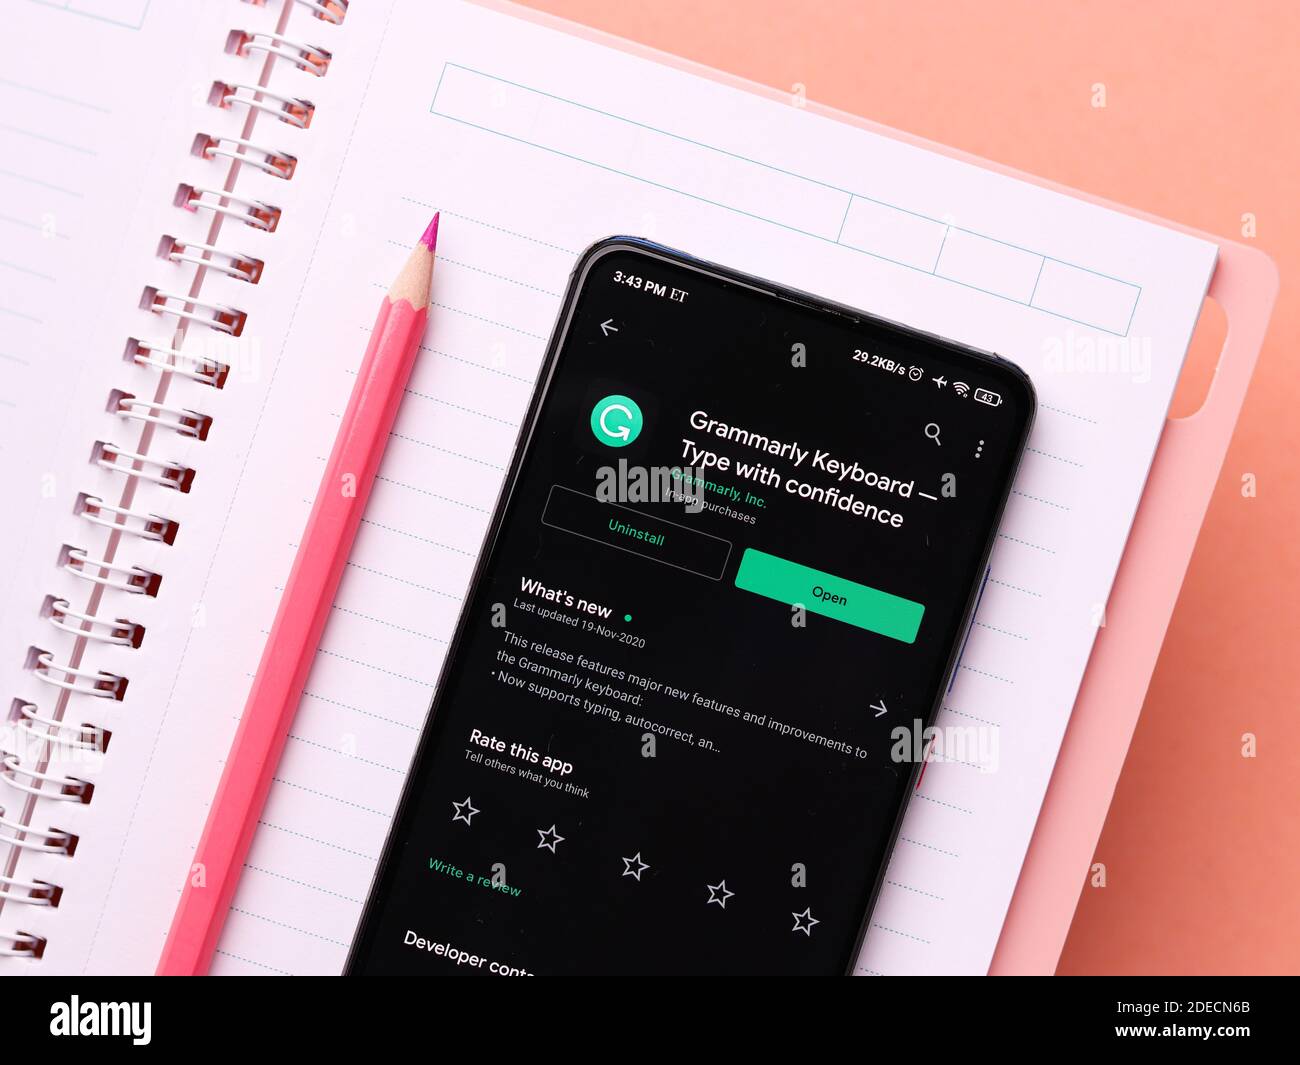 Assam, india - November 29, 2020 : Grammarly logo on phone screen stock image. Stock Photo